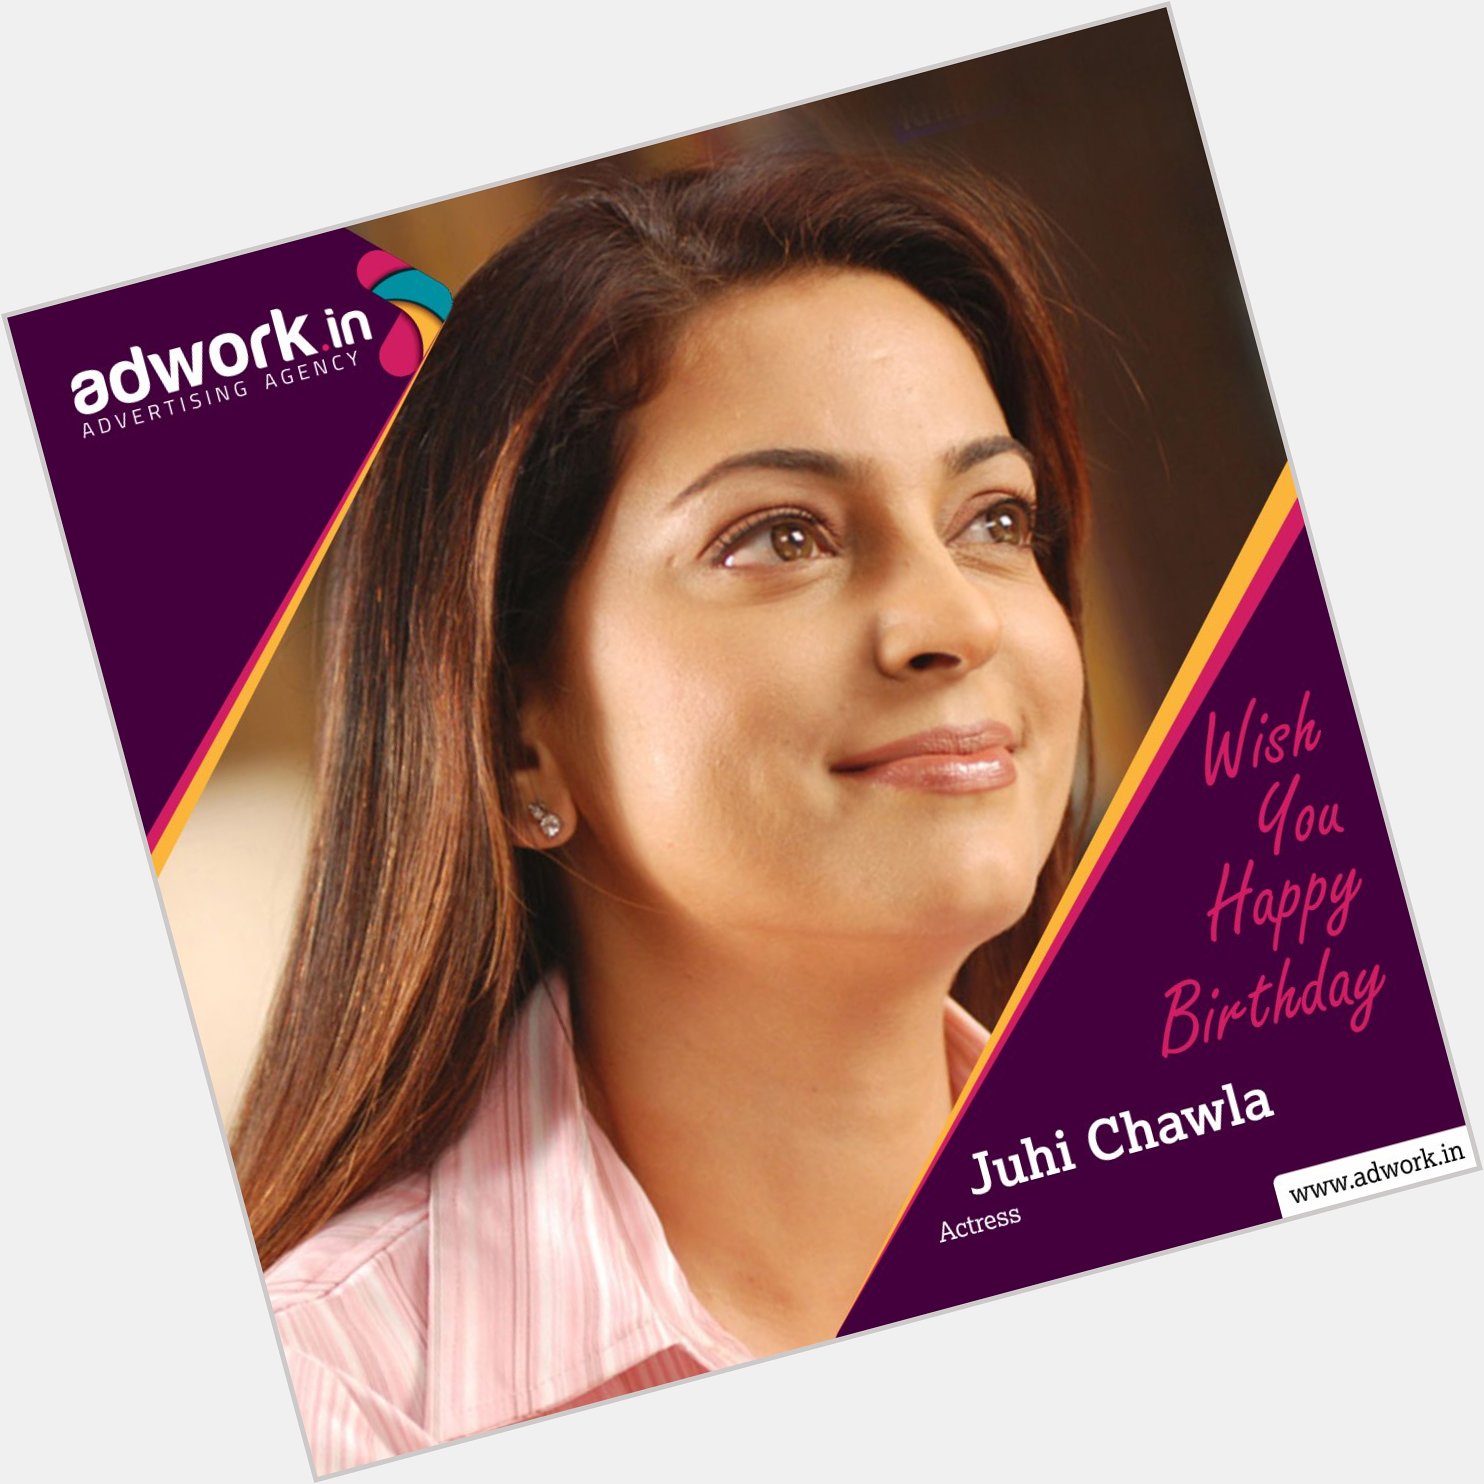 Wish you happy birthday Juhi Chawla, Visit on 